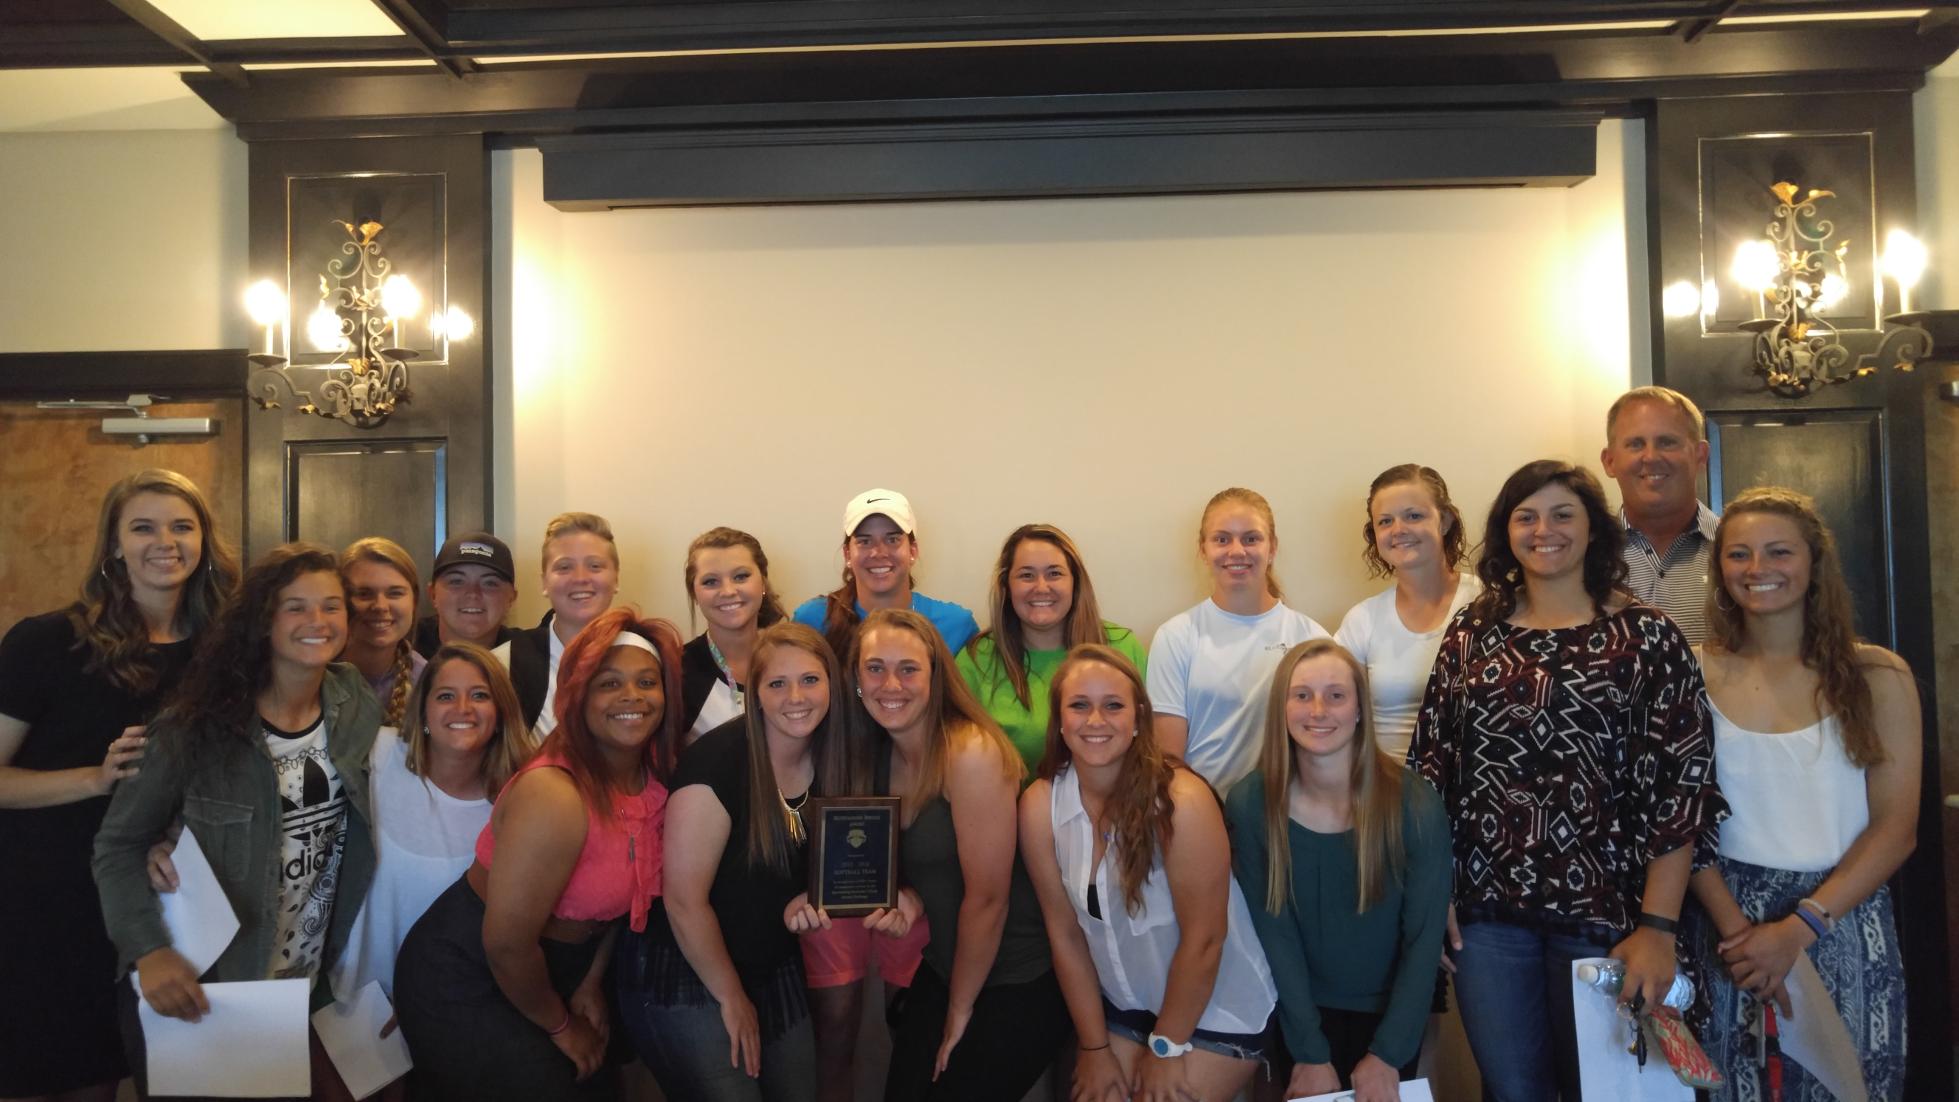 Pioneer Softball earns Outstanding Service Award